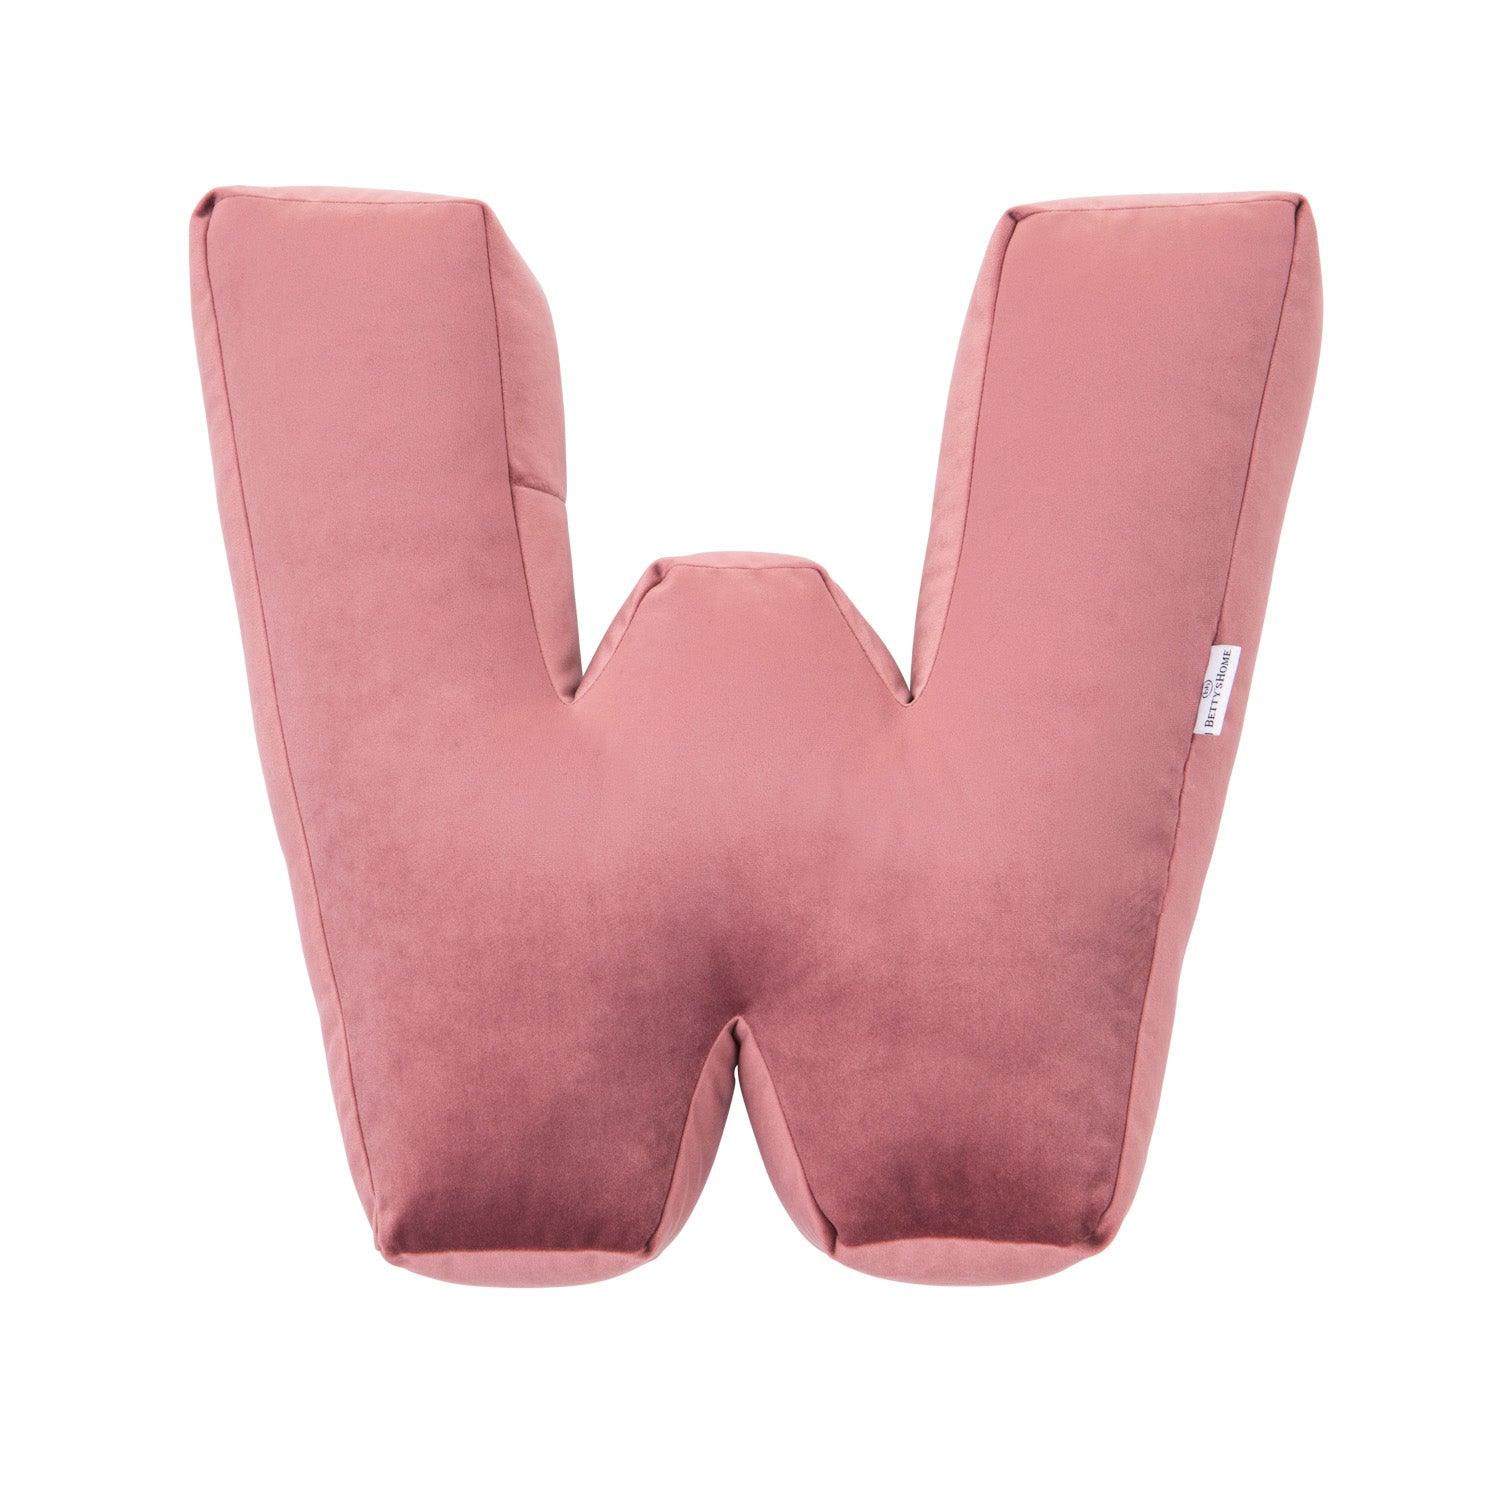 velvet letter cushion w old rose pink by bettys home 